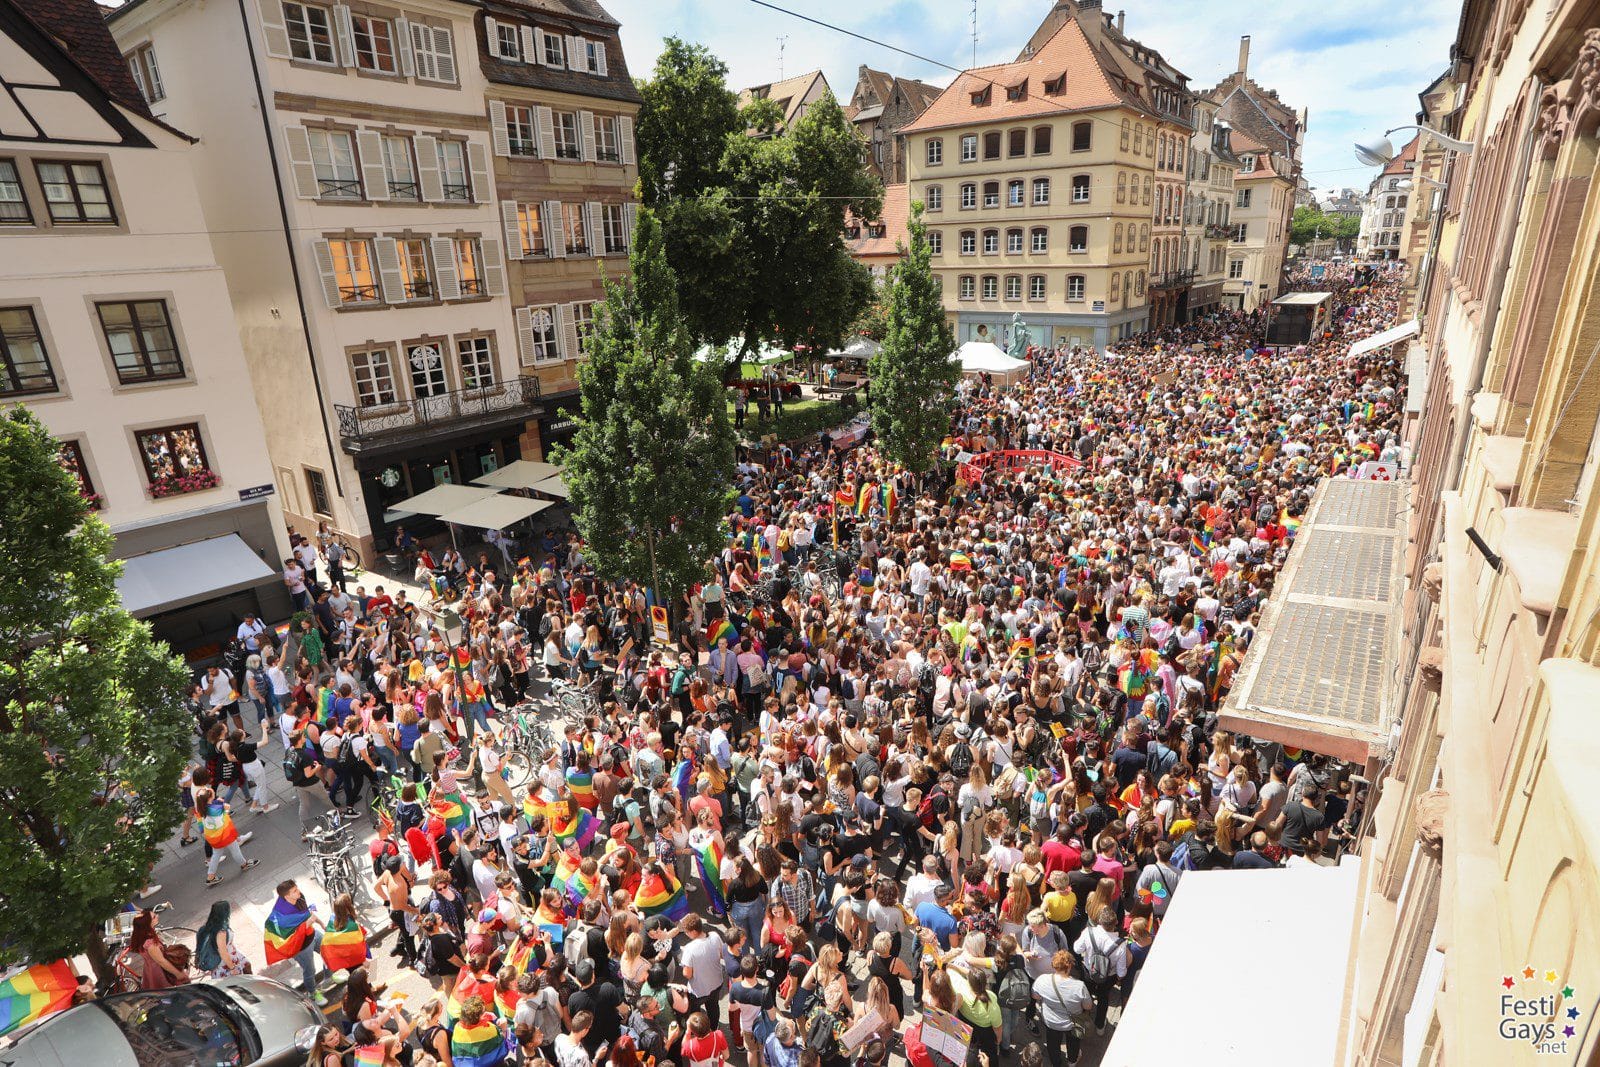 Défilé de la fierté LGBT à Strasbourg ce samedi 18 juin 2022